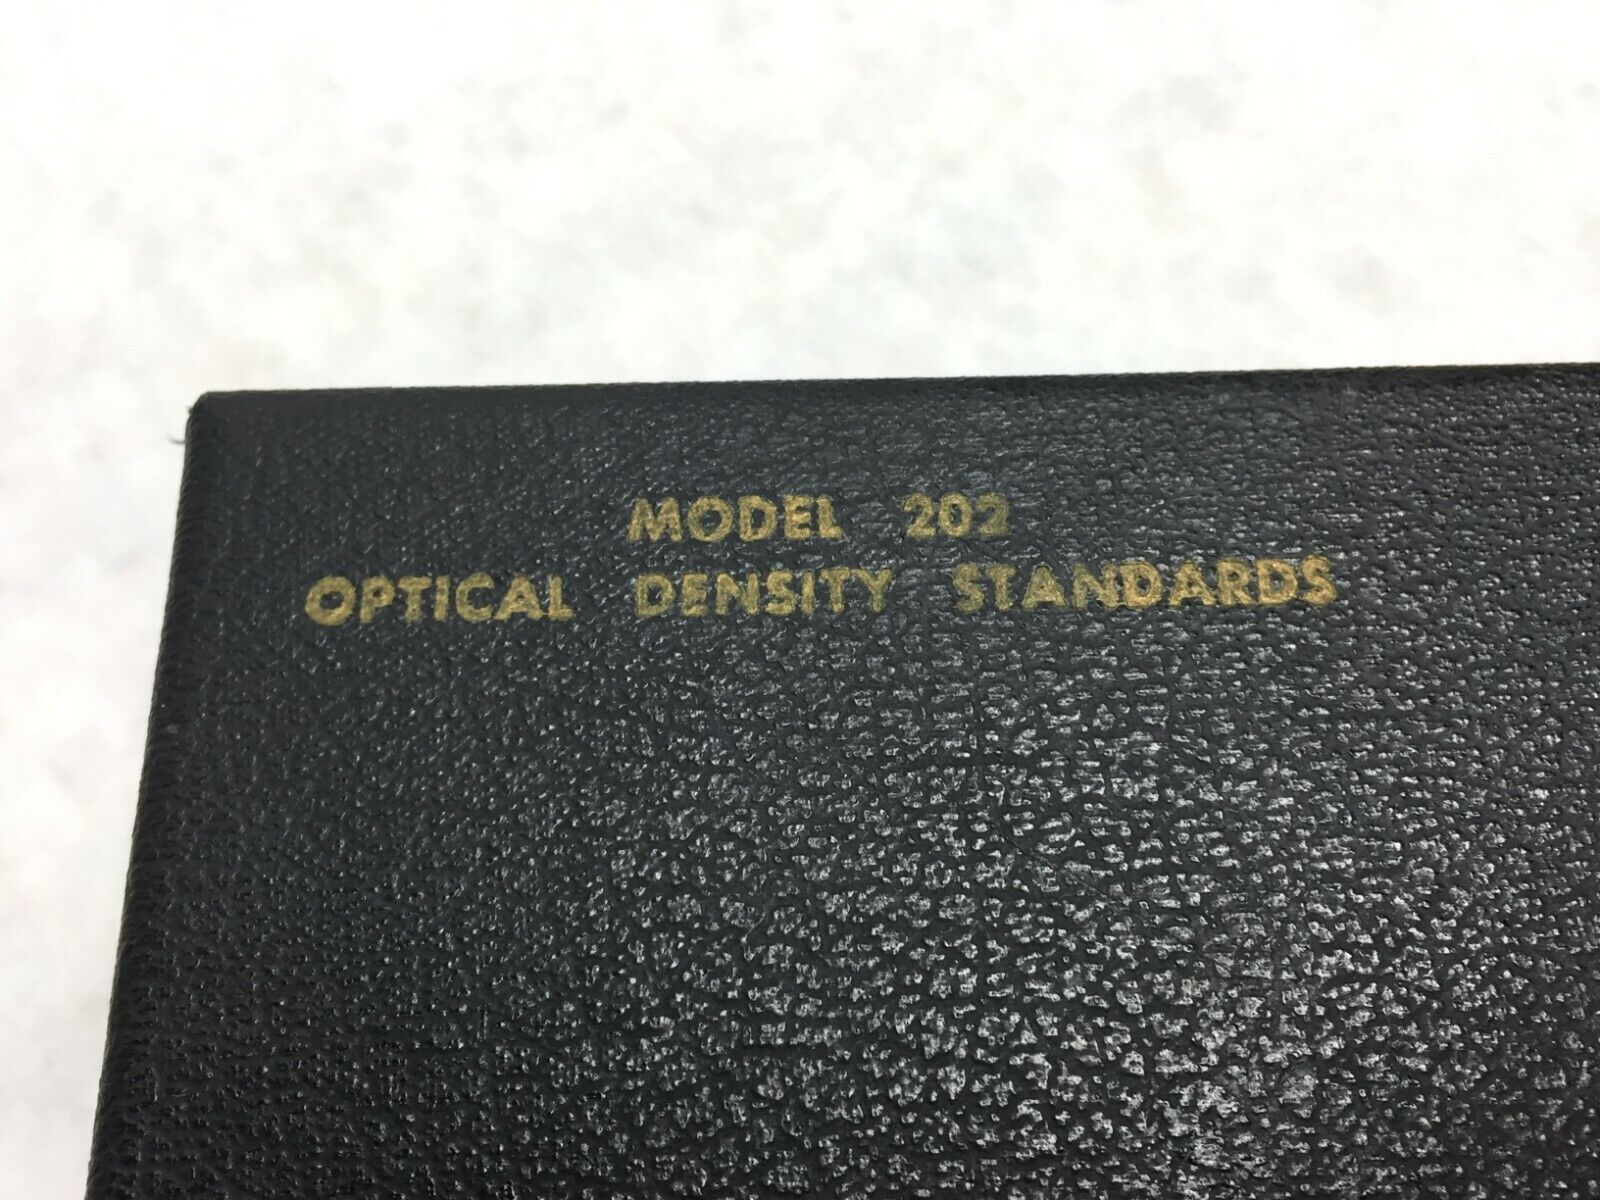 Gilford Instrument Laboratories Model 202 Optical Density Standards